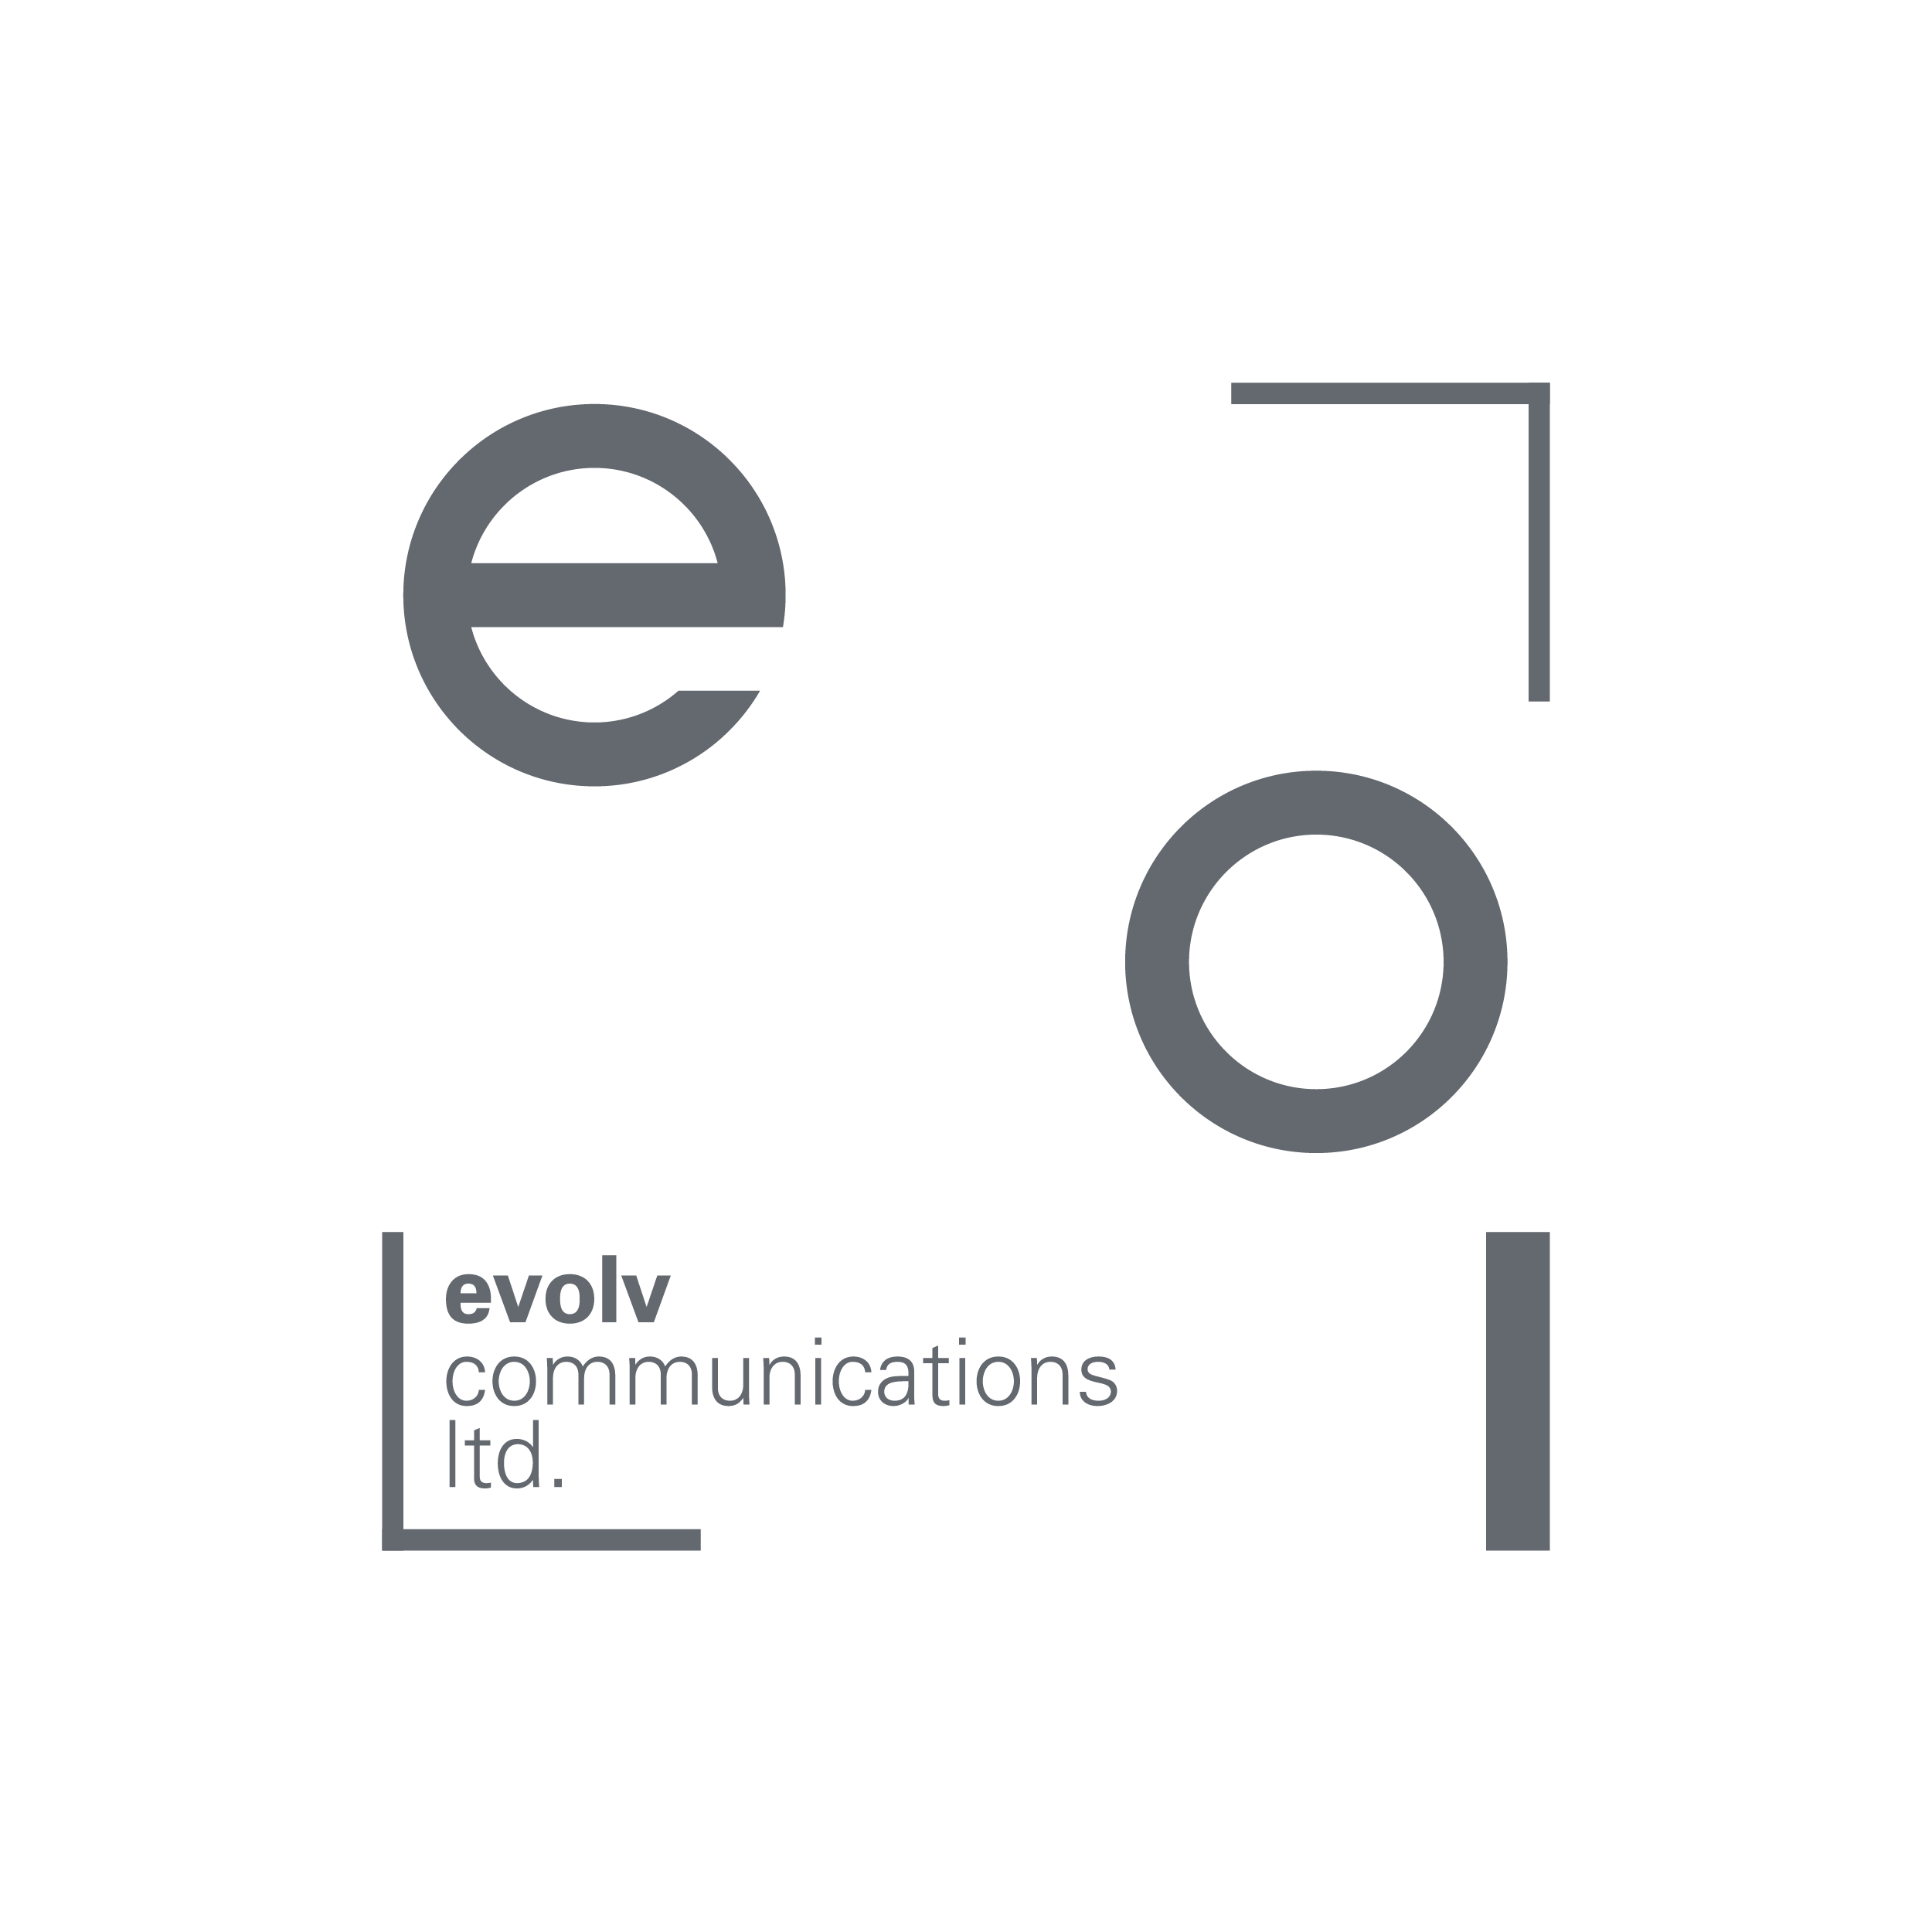 Evolv Communications Ltd. logo